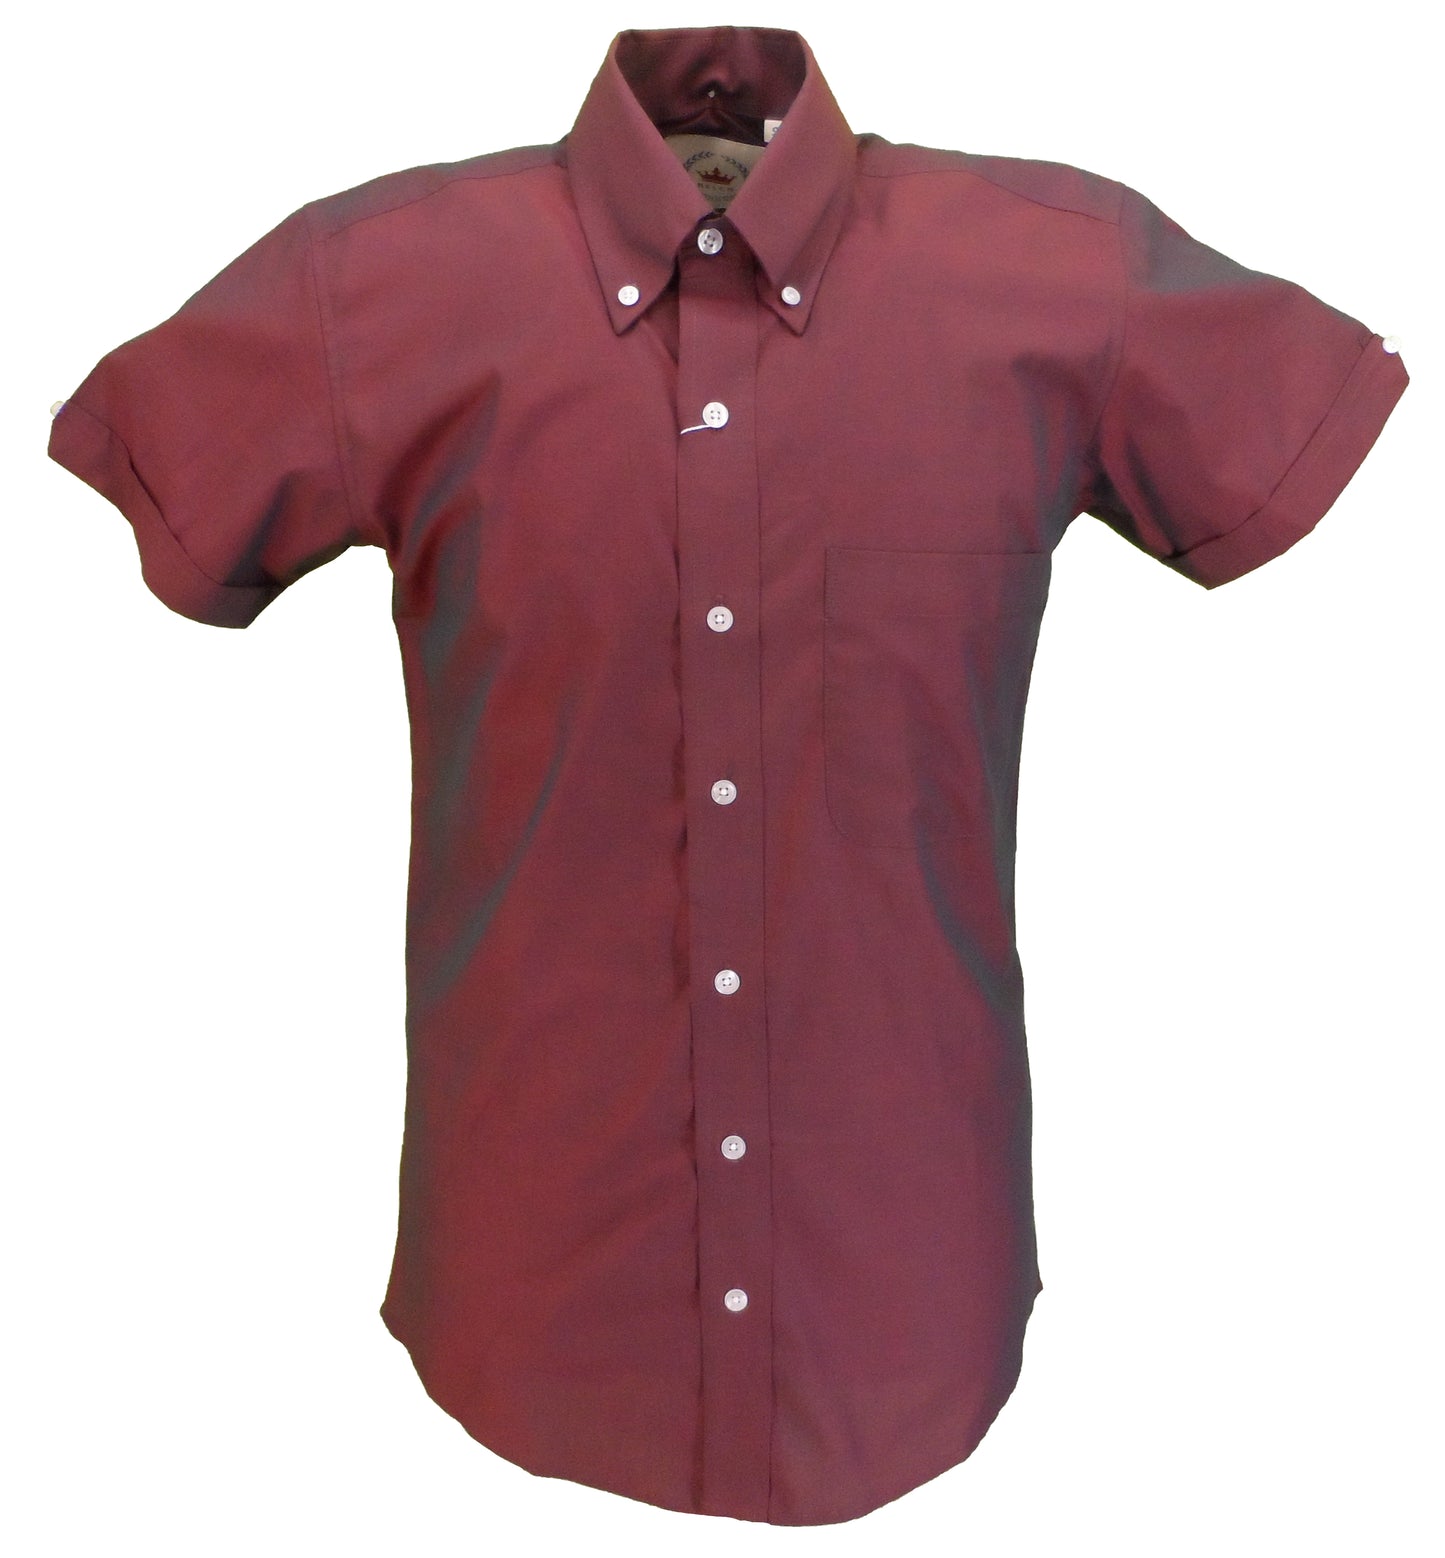 Relco Mens Short Sleeved Burgundy/Black Tonic Mod Retro Shirt